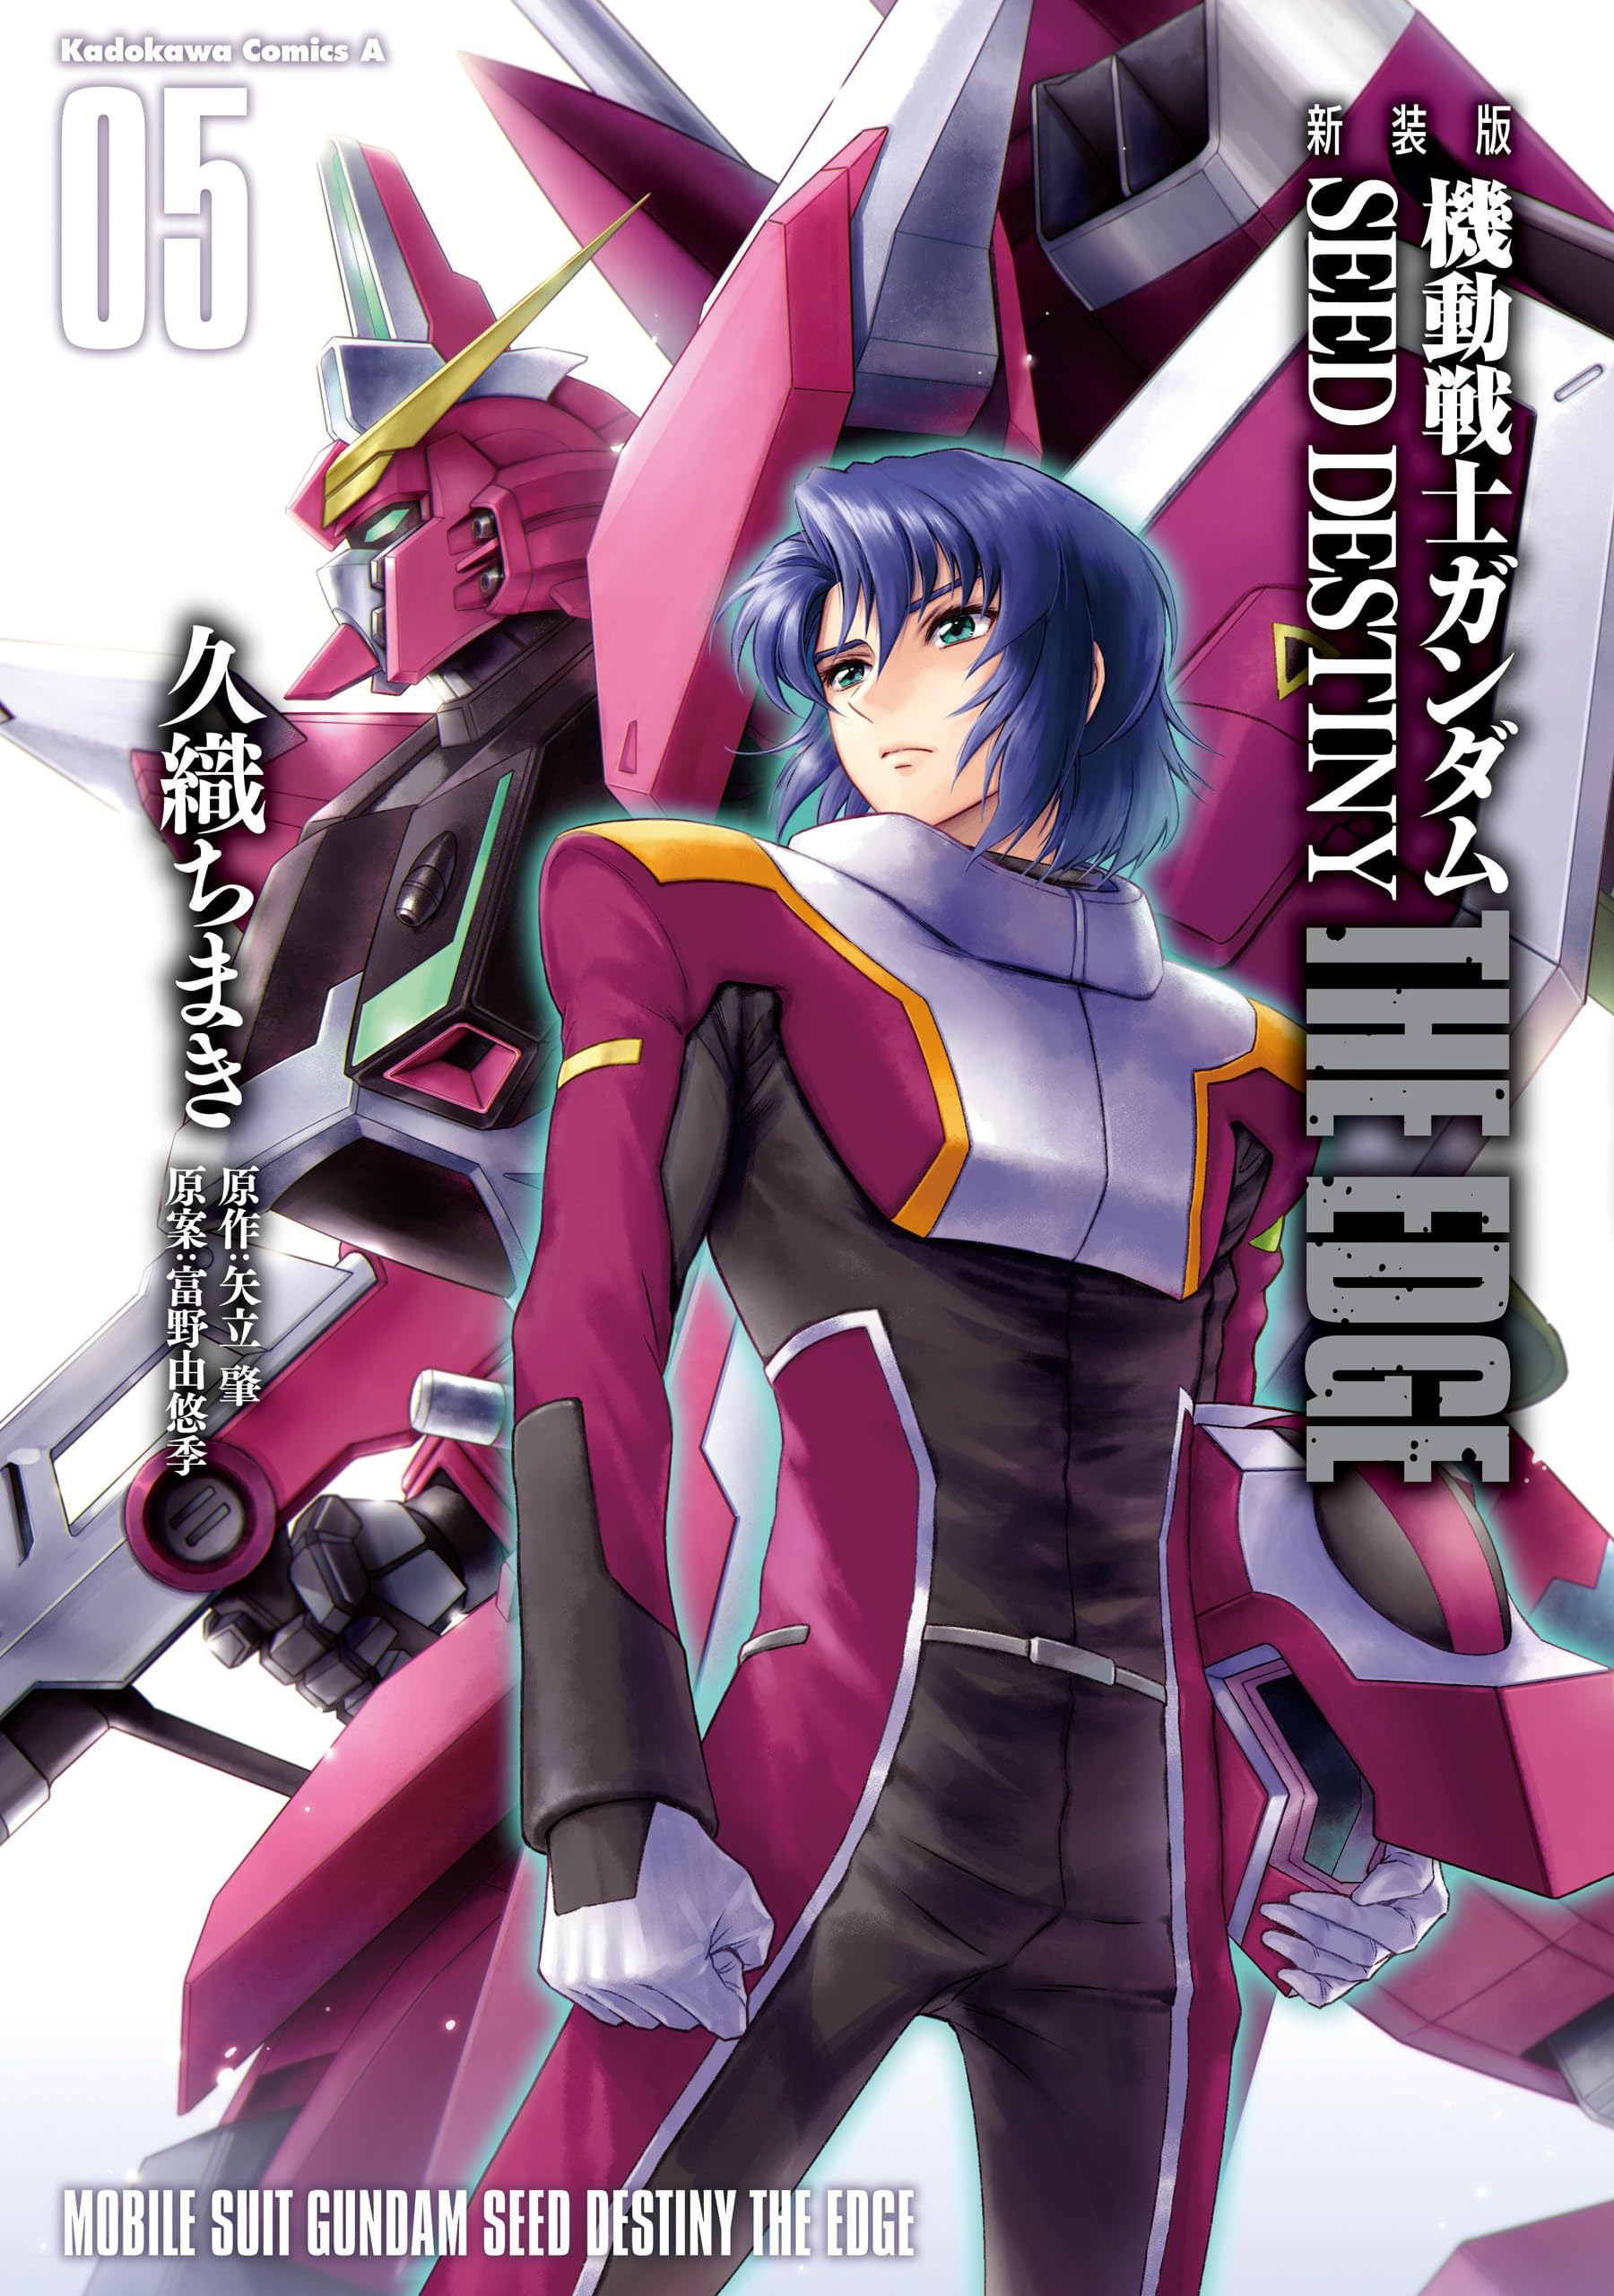 Mobile Suit Gundam SEED Destiny - The Edge - MangaDex